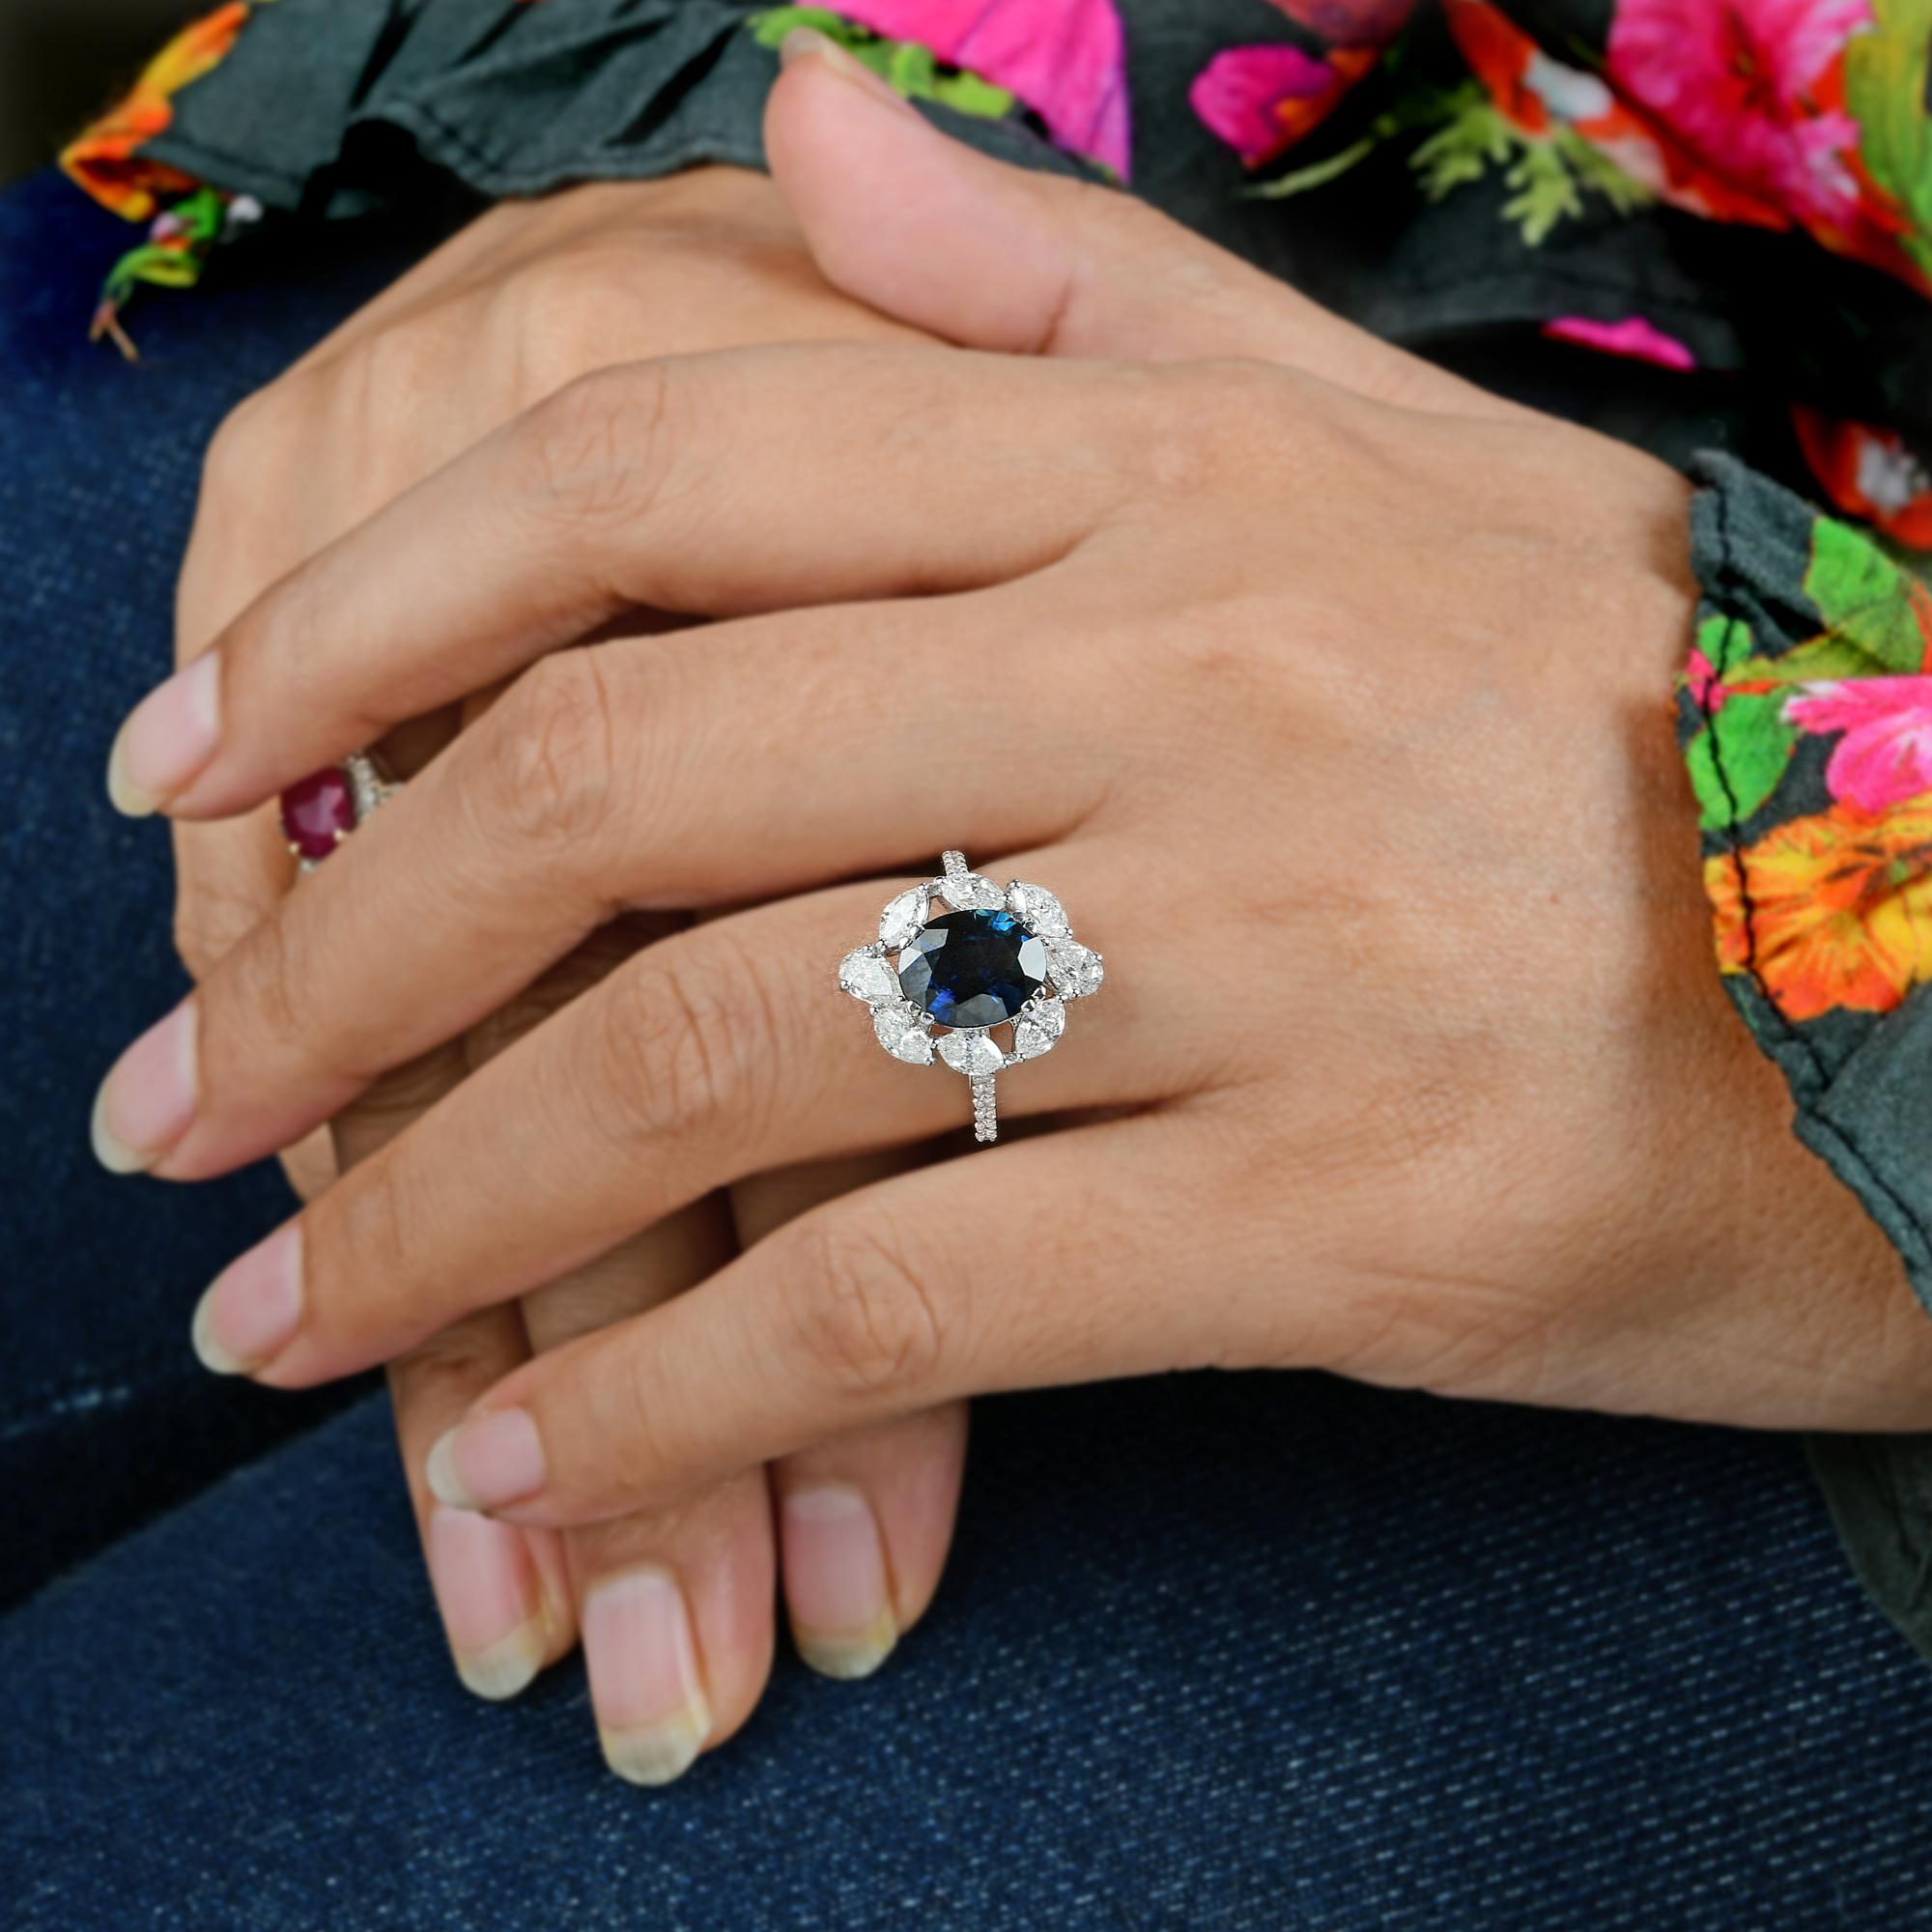 For Sale:  Oval Blue Sapphire Gemstone Cocktail Ring Diamond 18 Karat White Gold Jewelry 4